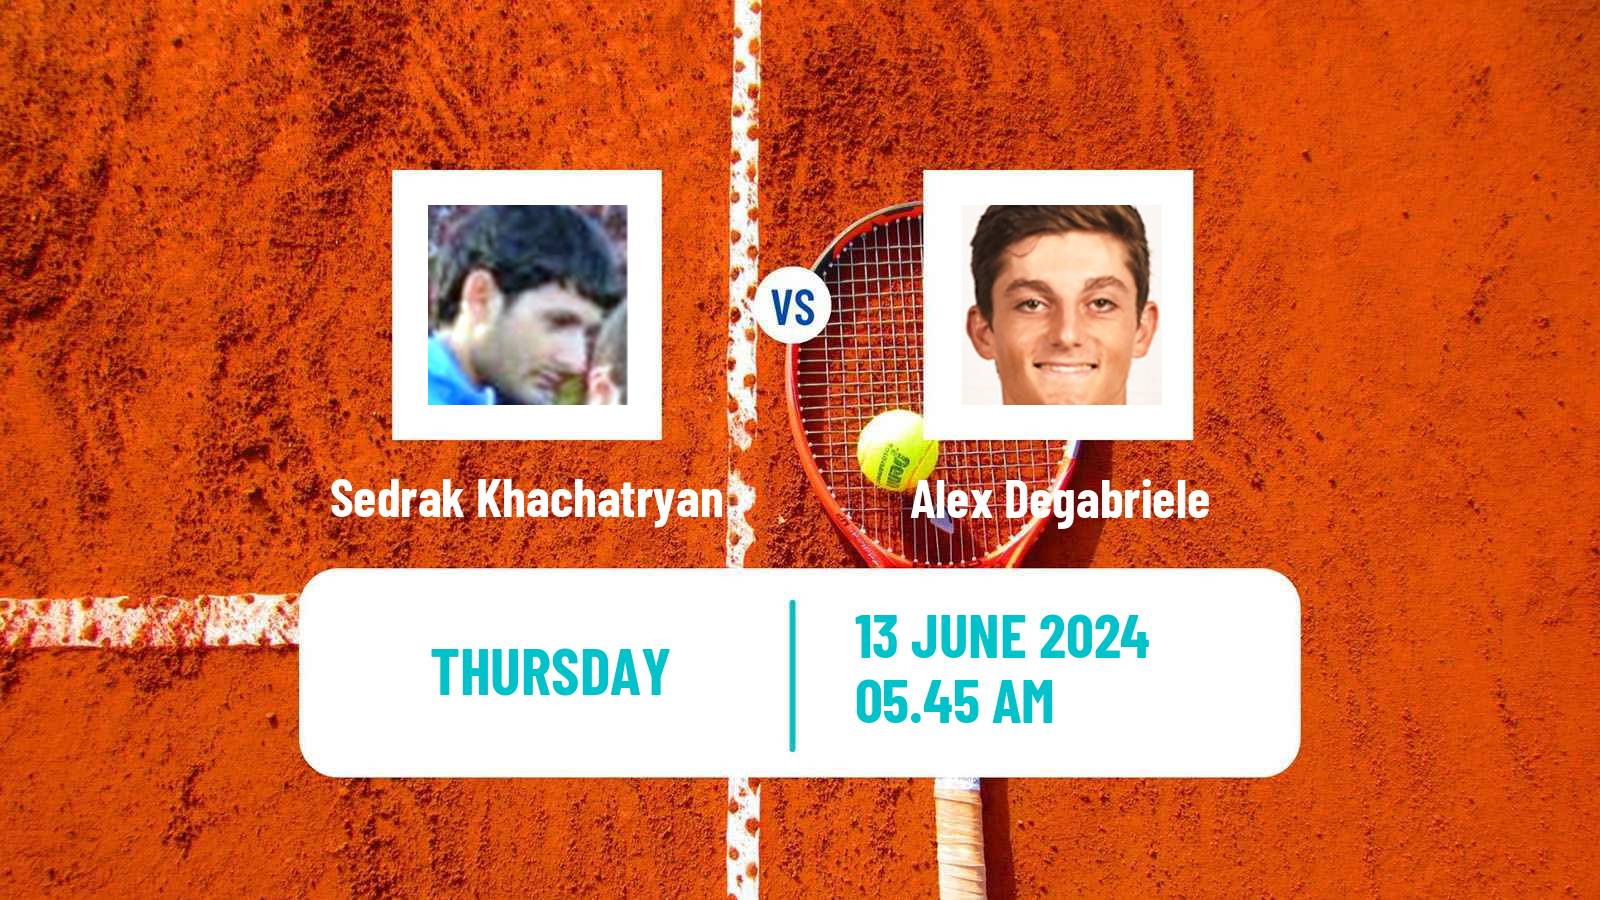 Tennis Davis Cup Group IV Sedrak Khachatryan - Alex Degabriele